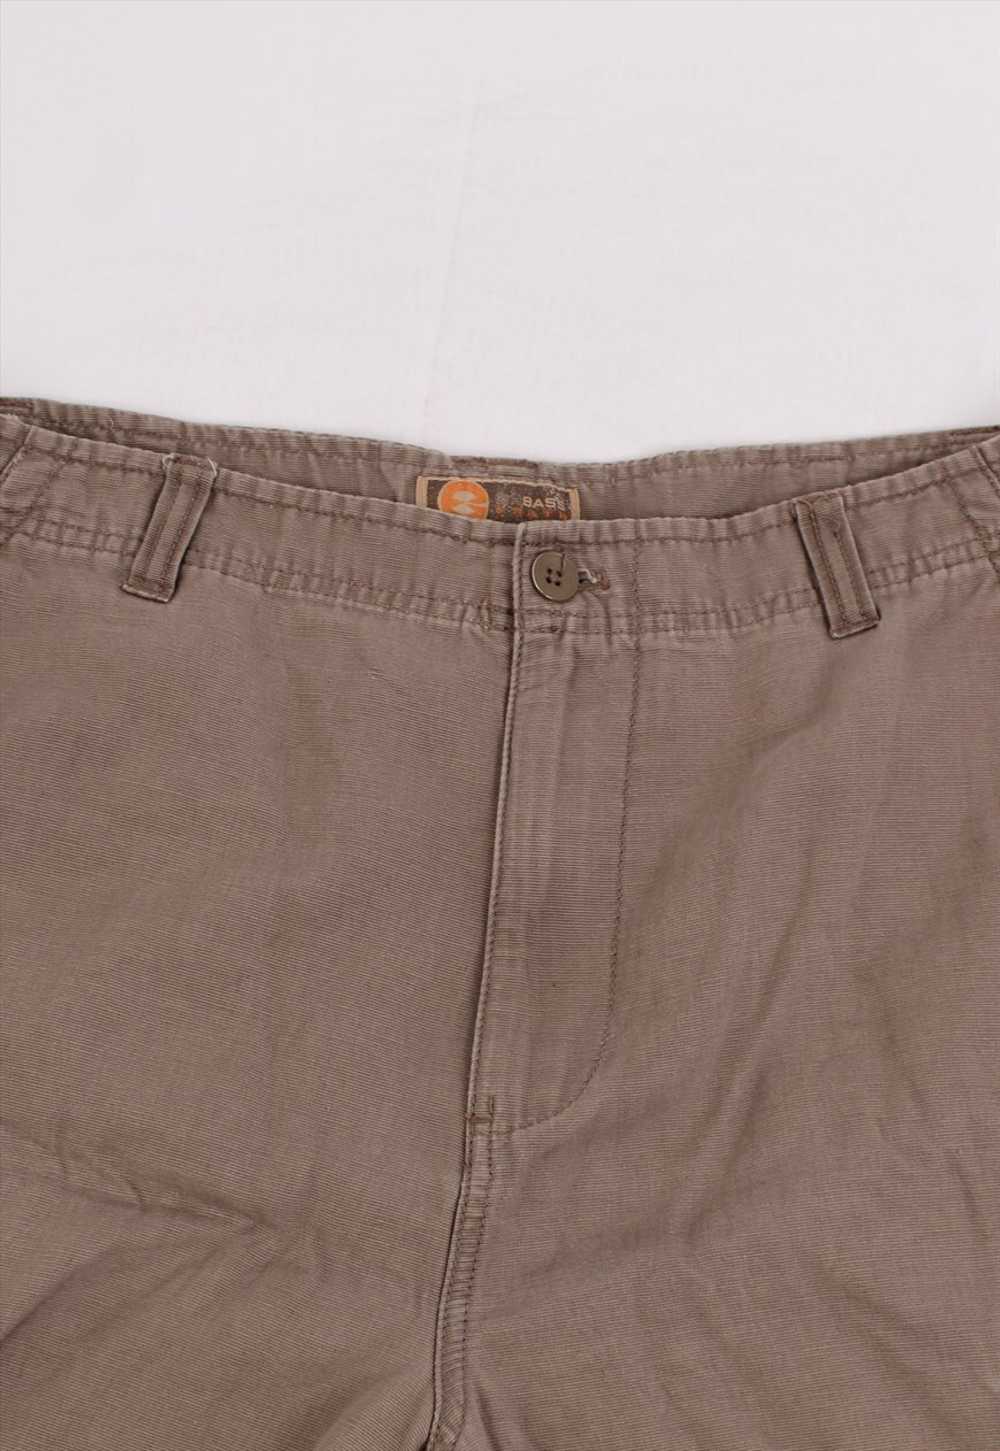 Mens Vintage 90's GH bass light brown cargo shorts - image 2